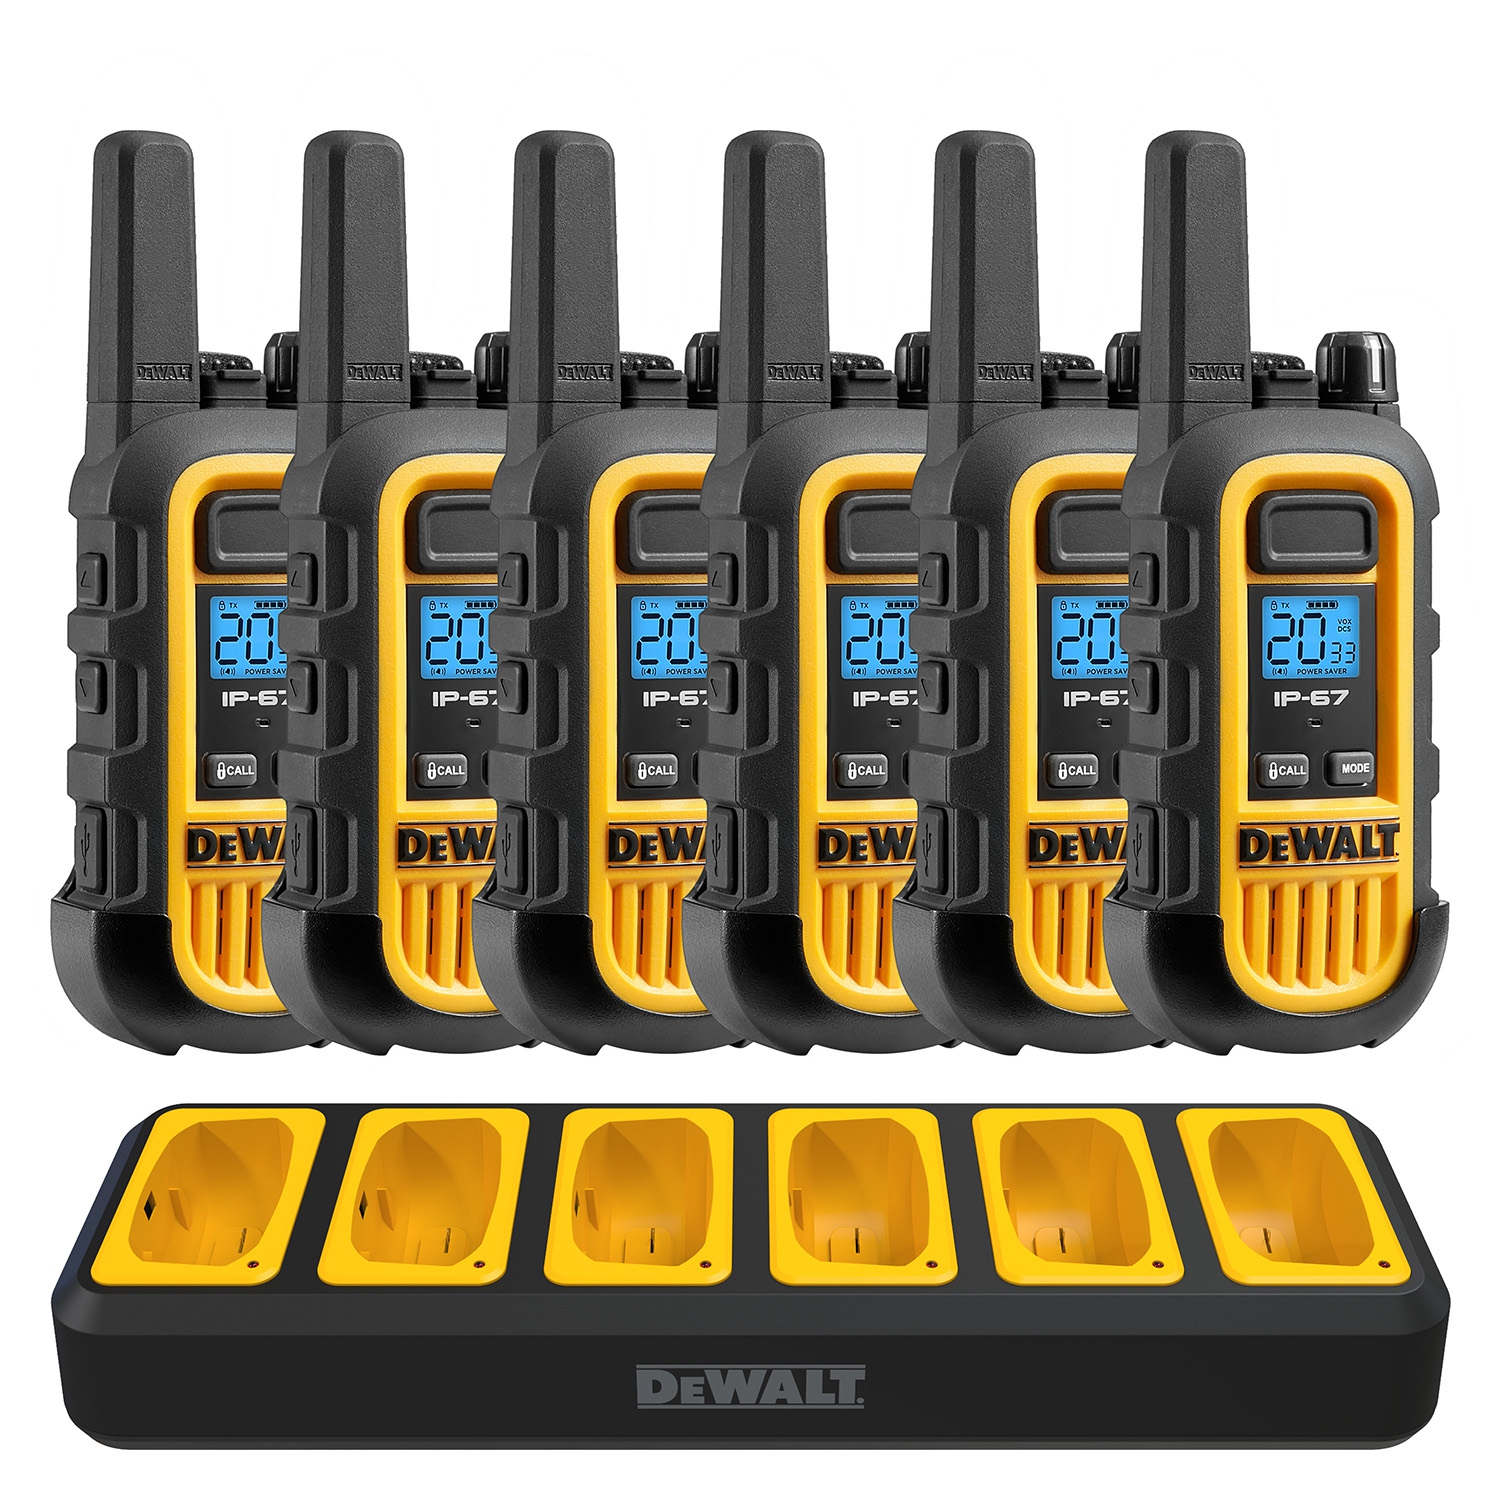 6 Dewalt DXFRS300 Walkie Talkies - 1 Watt, Heavy Duty, Waterproof, 22 Channels, Long Range & Rechargeable Two-Way Radio Set with VOX, 6 Pack of Radios + Charger